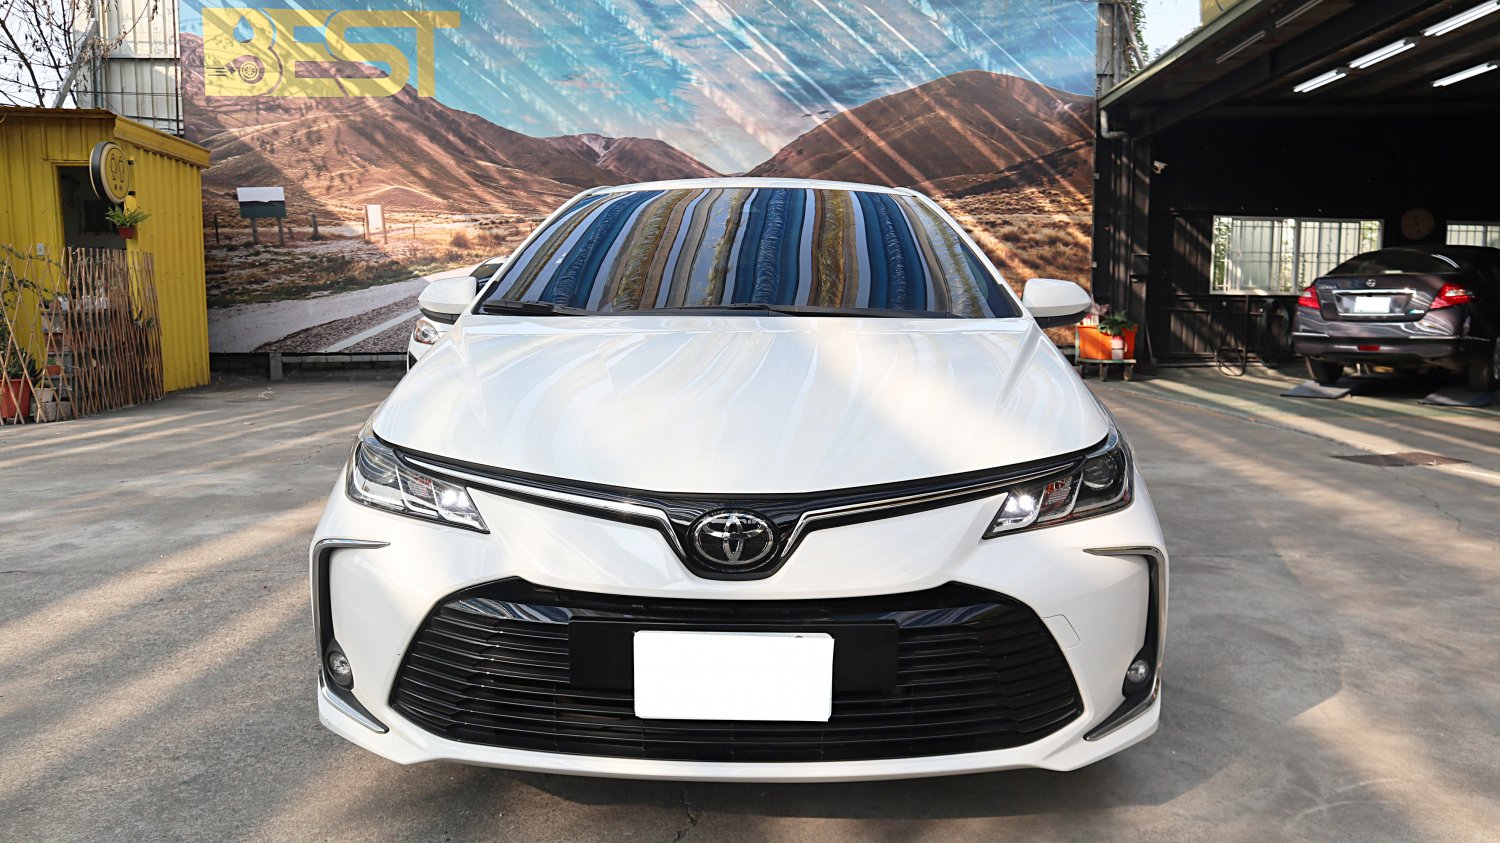 Toyota 豐田 ／ Altis ／ 2019年 ／ 2019年Toyota Altis 白色 豐田中古車 ／ 成交區